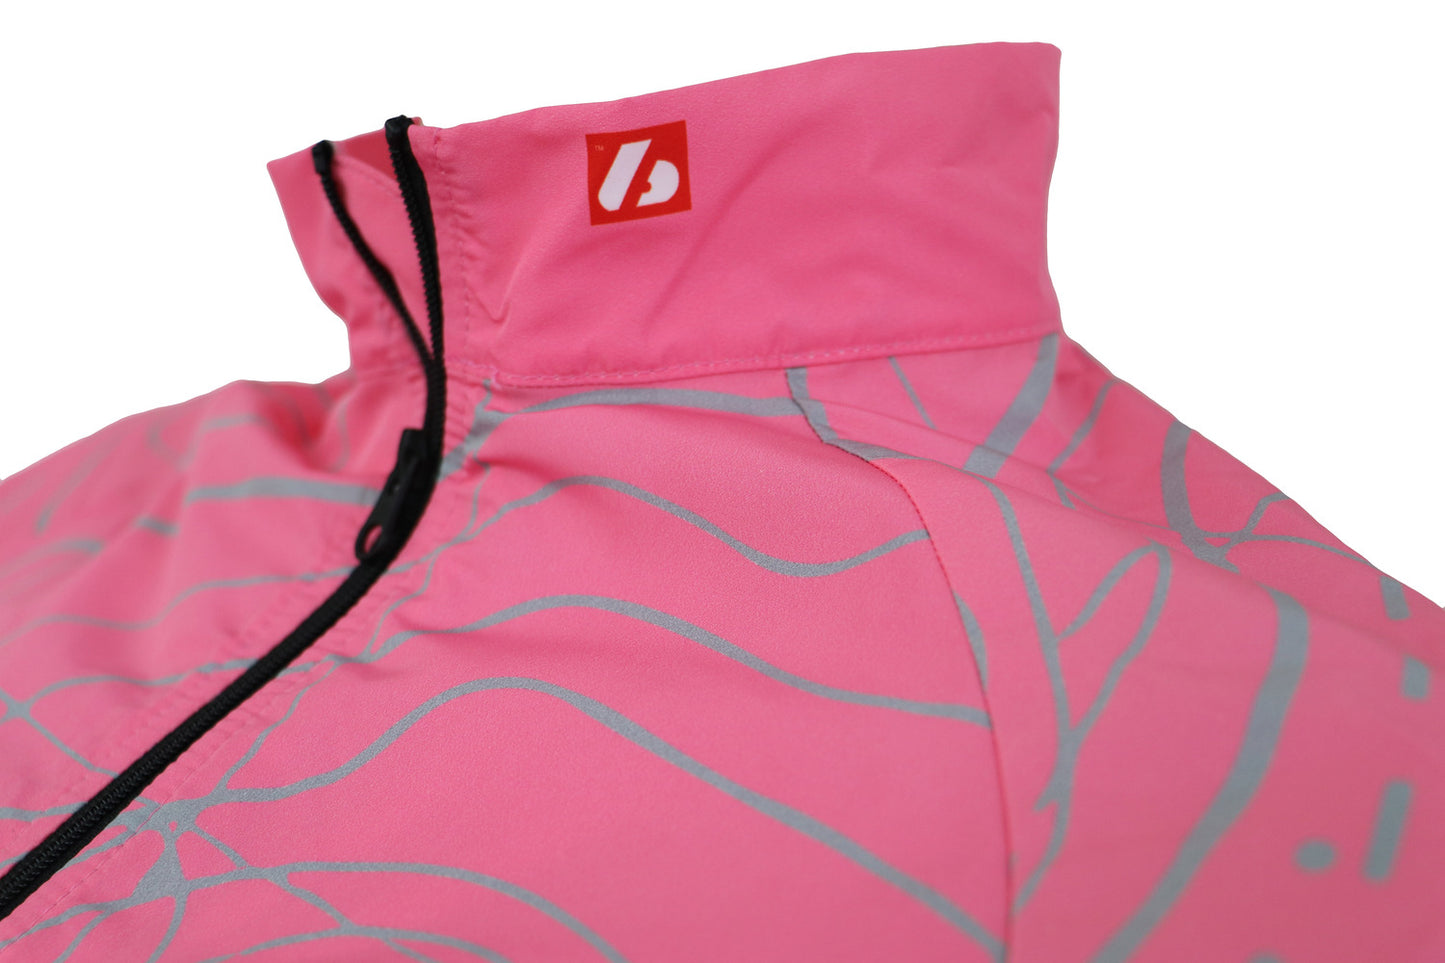 Bike textile - Long-sleeved jacket, pink, windbreaker